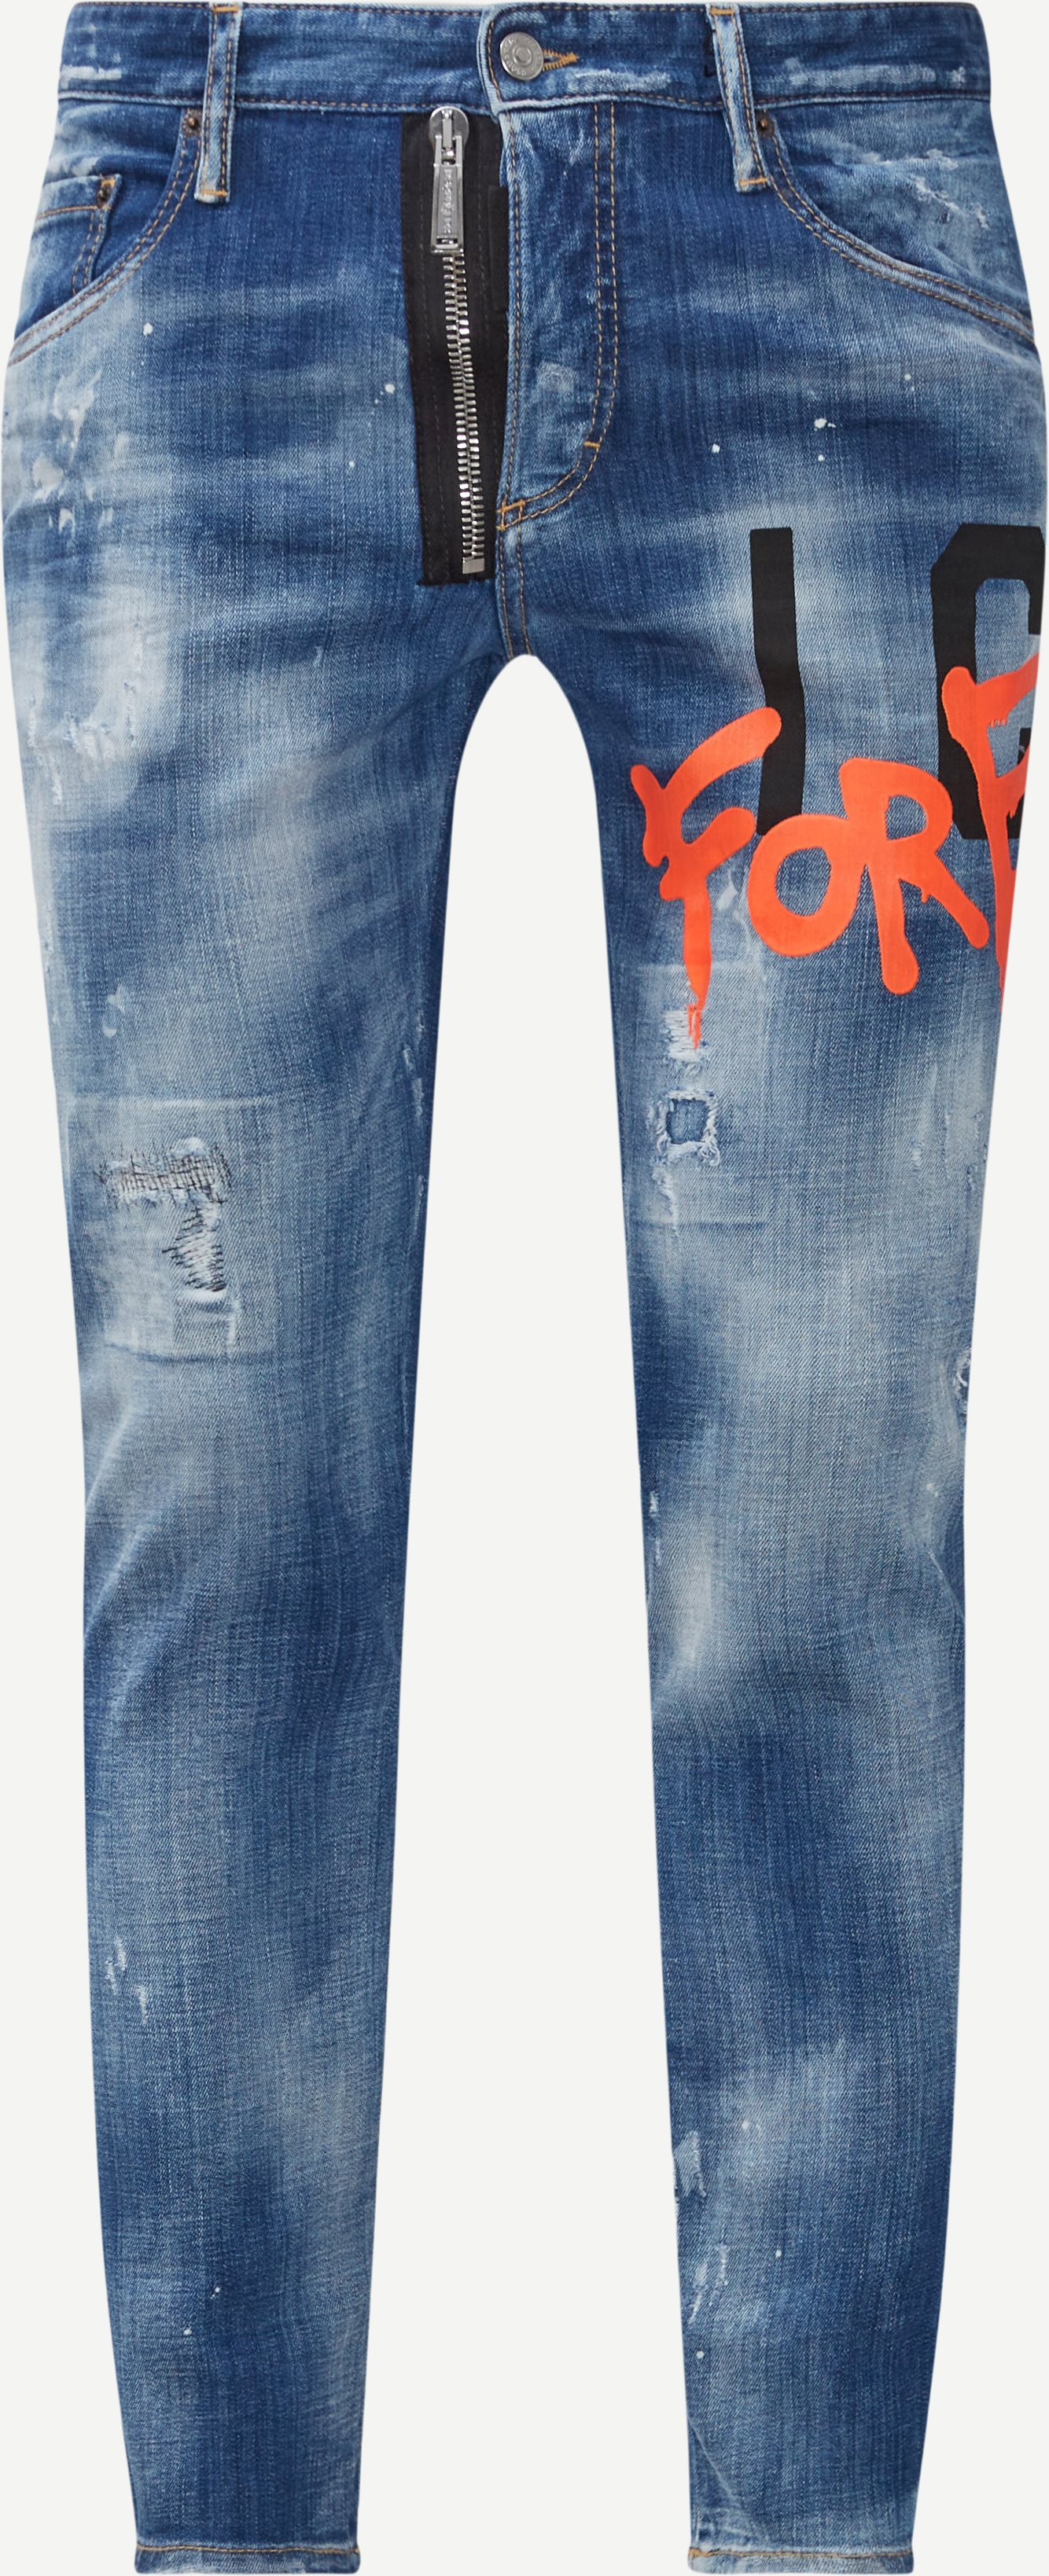 Detaillierte kaputte Jeans - Jeans - Slim fit - Jeans-Blau